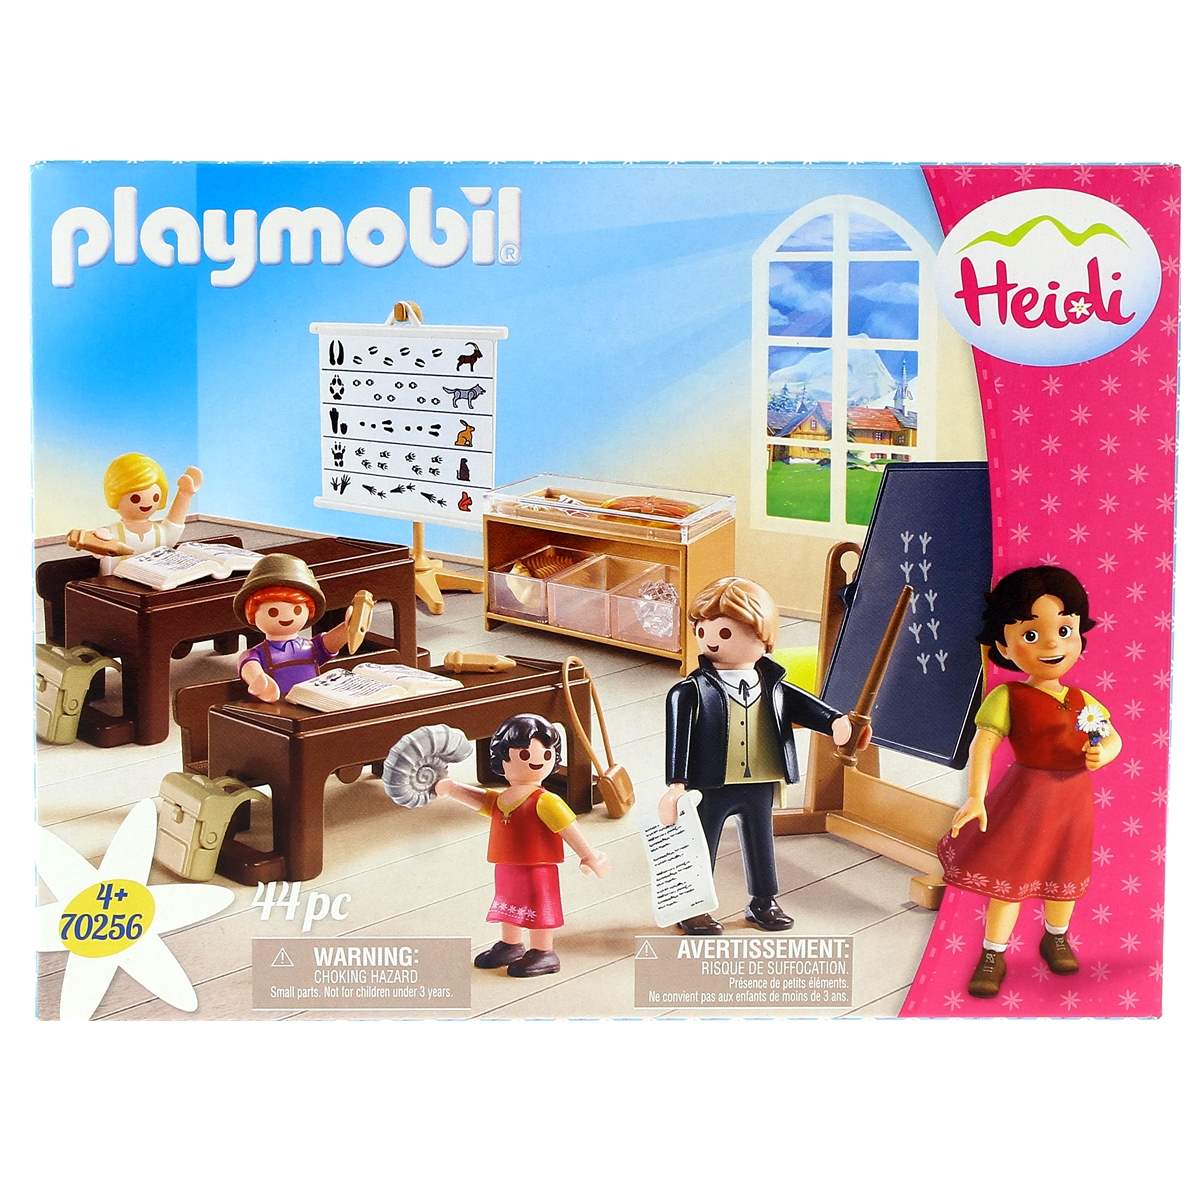 Playmobil heidi Playmobil de segunda mano barato